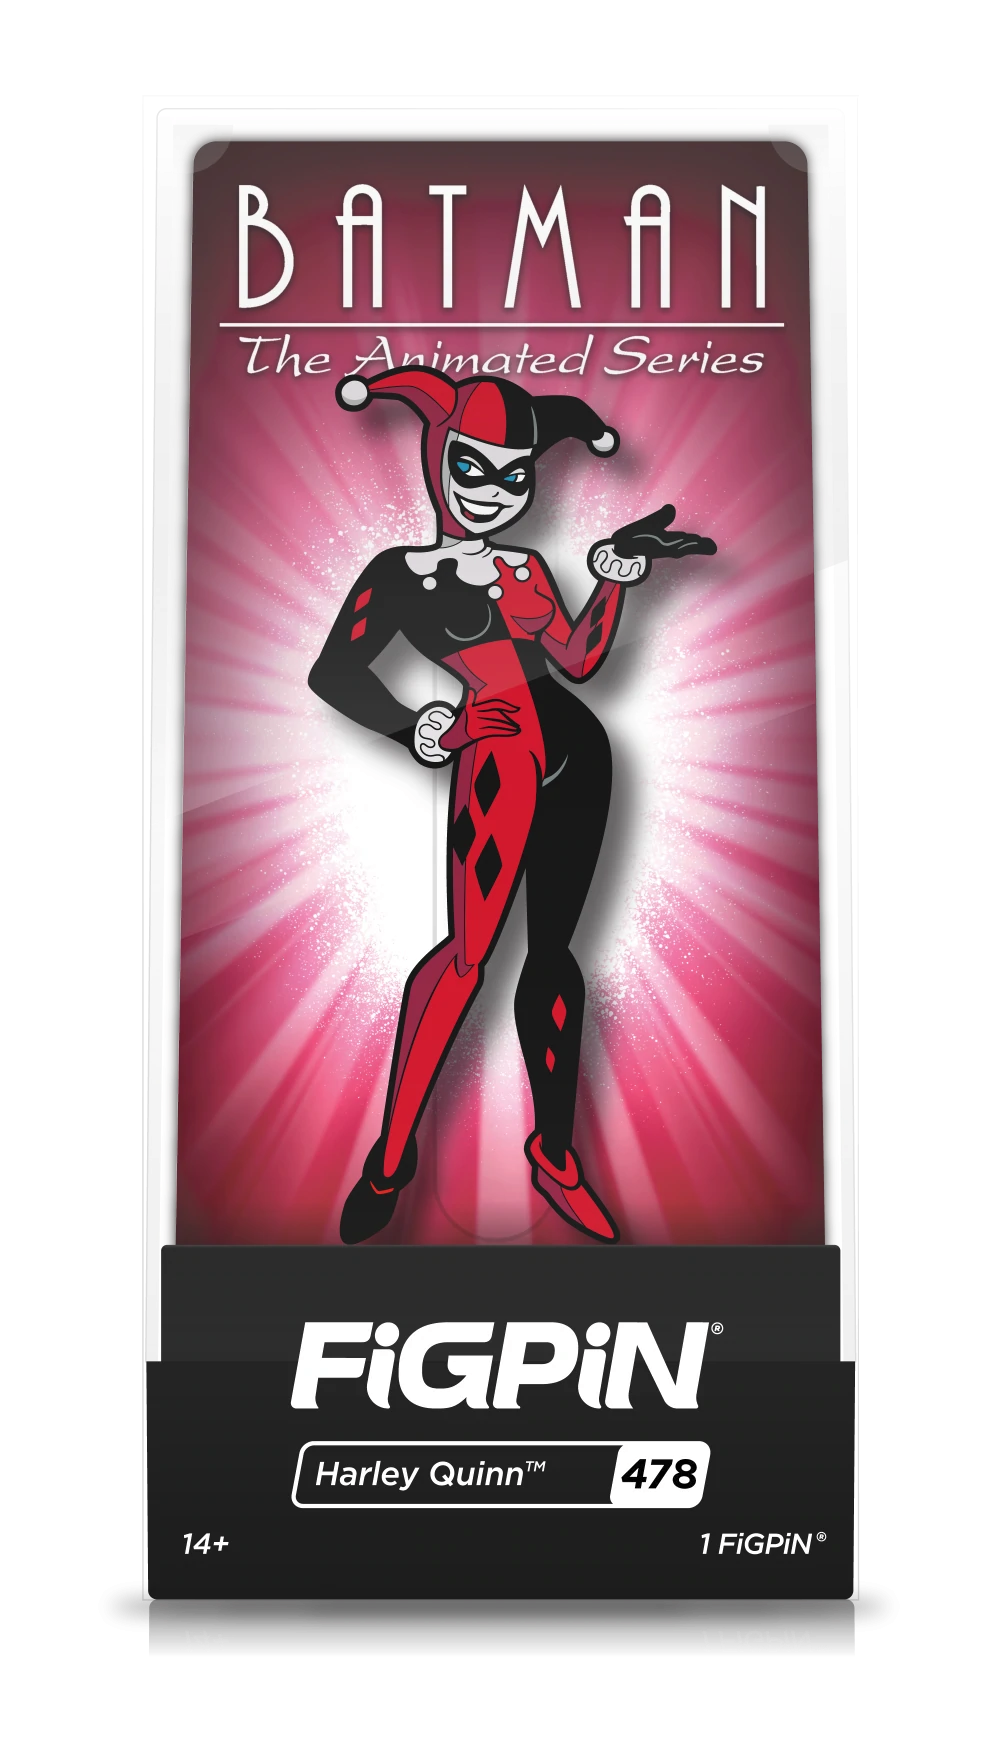 FiGPiN Harley Quinn (478) Collectable Enamel Pin MKTV6AXCNB |28284|